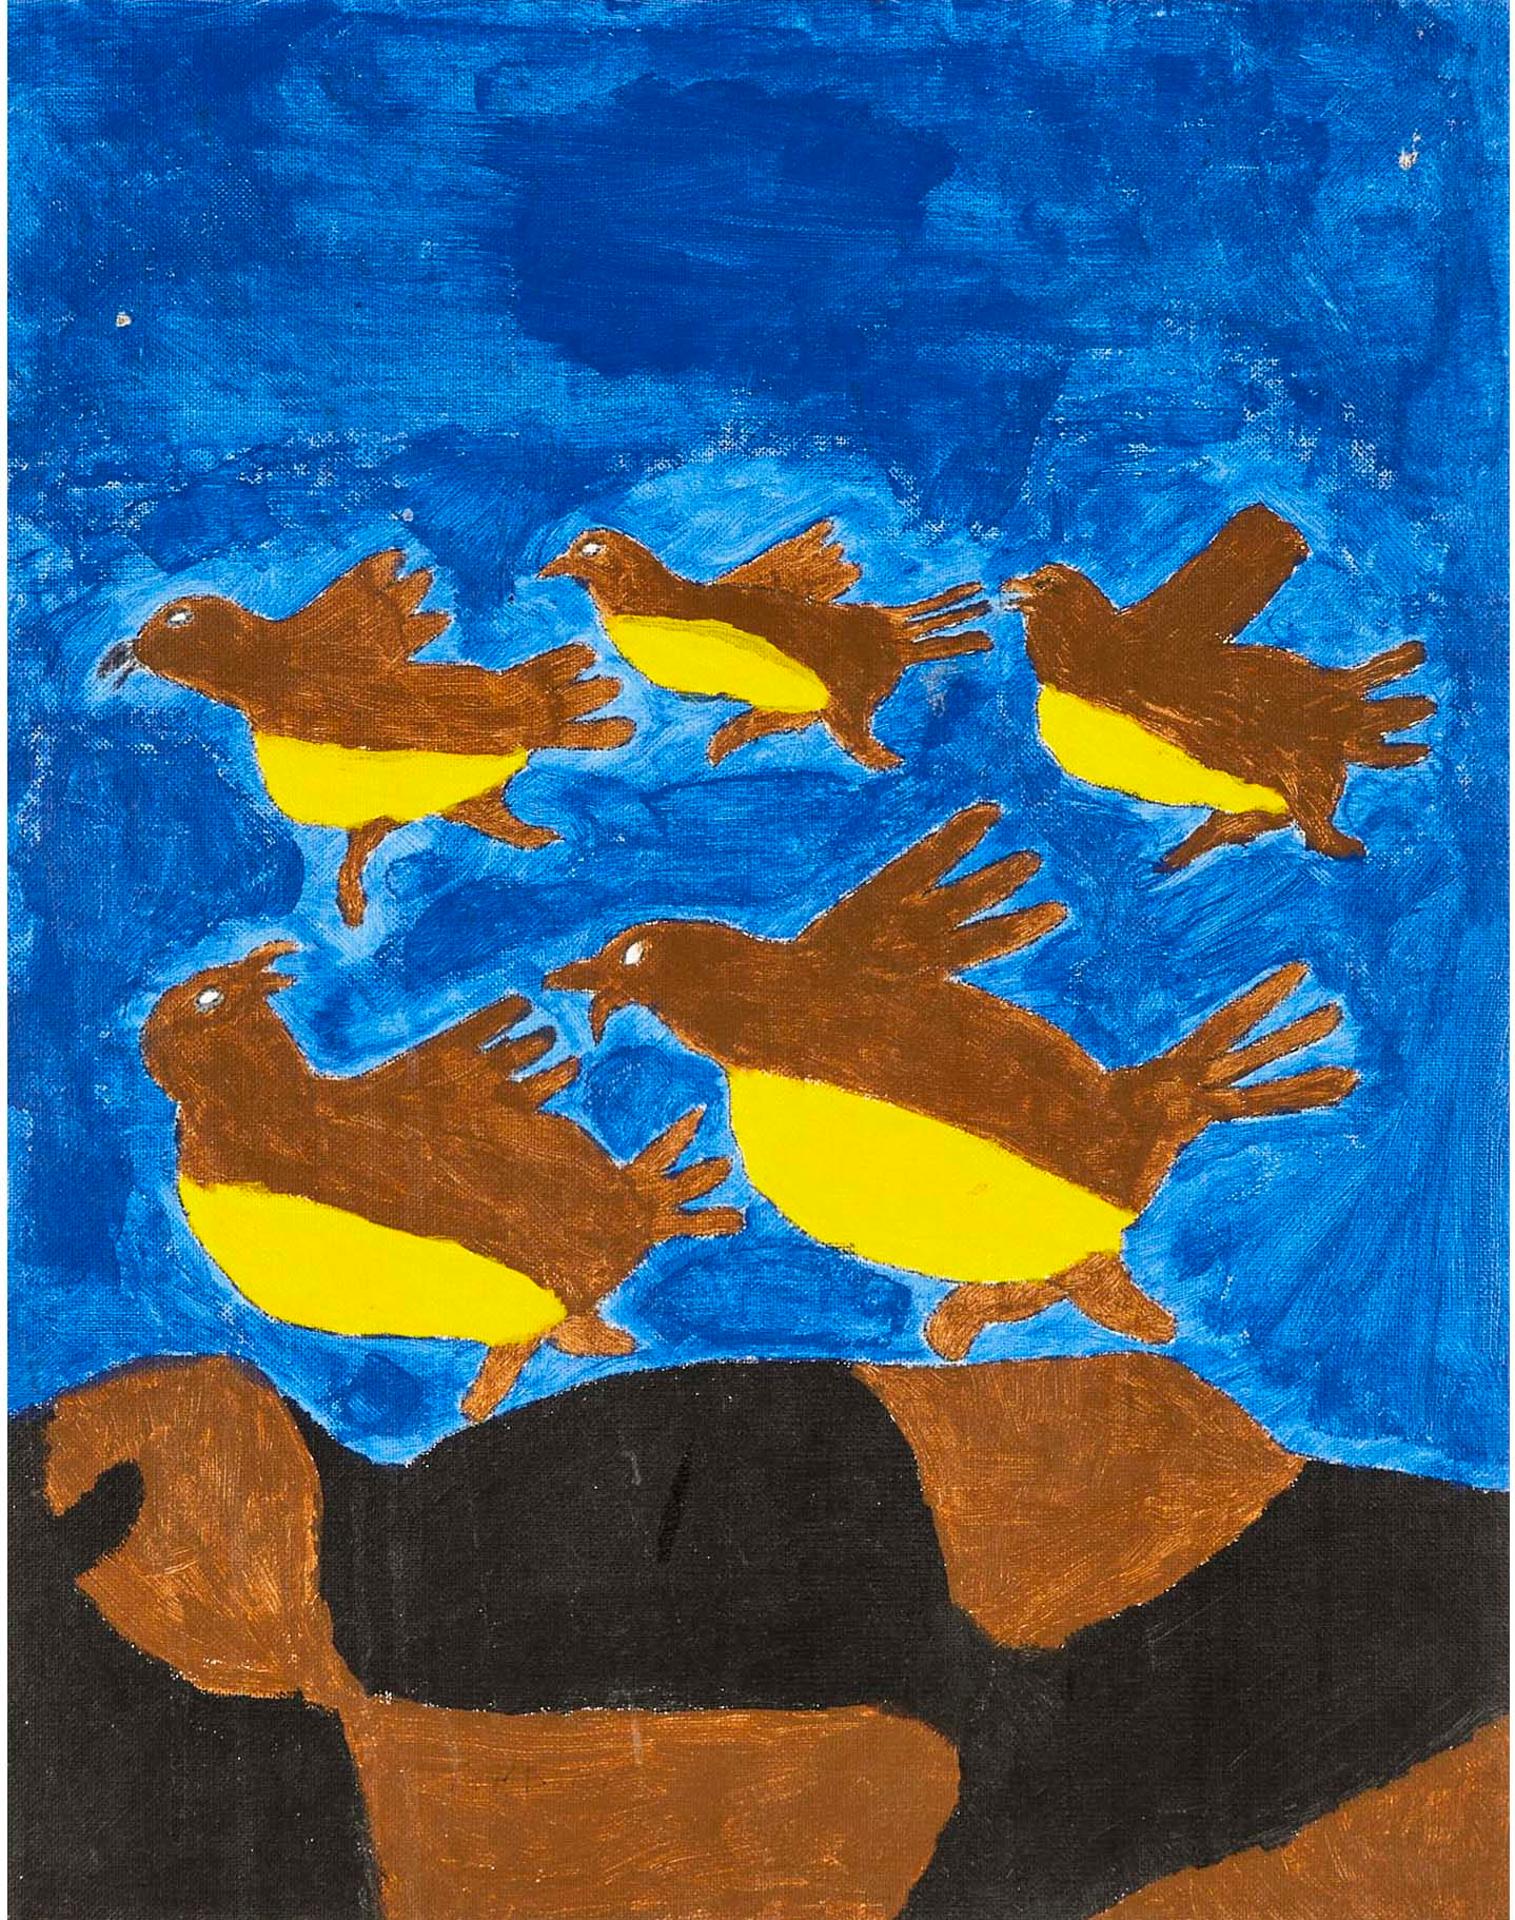 Kingmeata Etidlooie (1915-1989) - Untitled (Birds Flying Over)